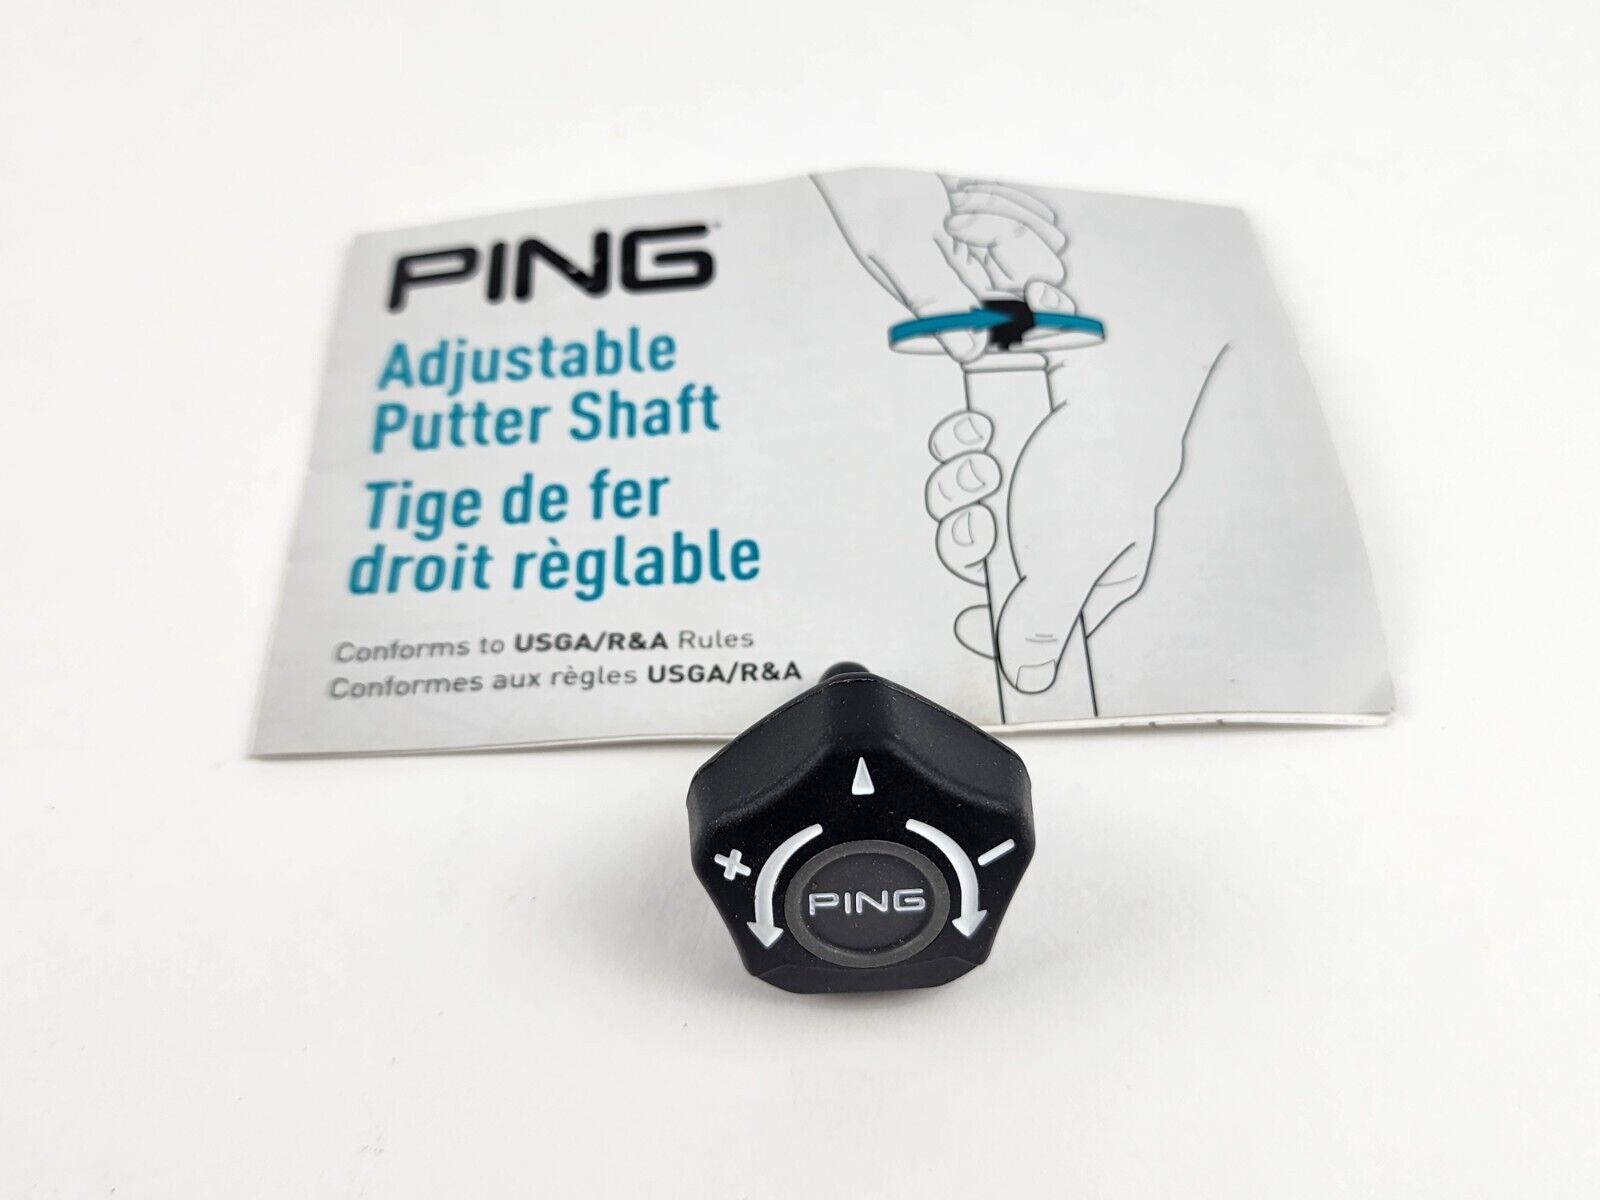 New Ping Golf Putter Shaft Adjustable Tool Sigma 2 and Heppler New unused - $9.89